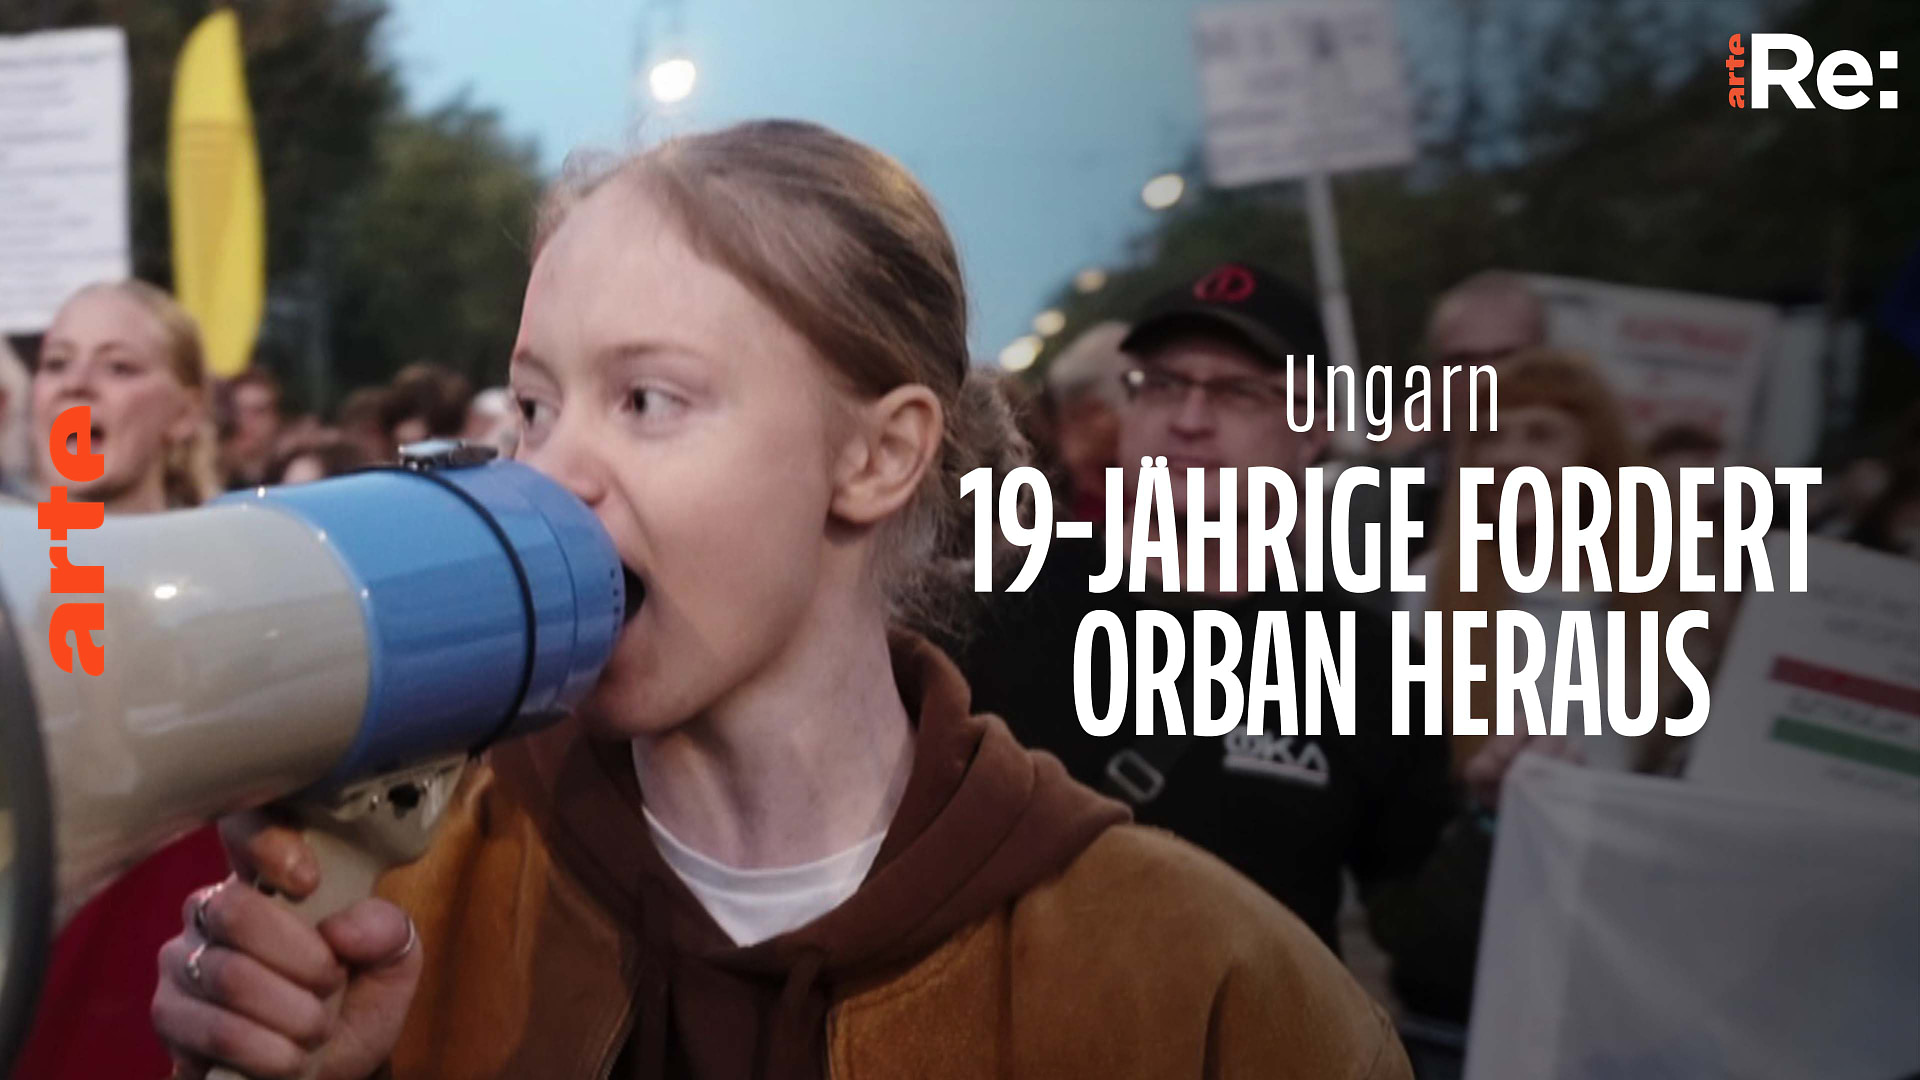 Re: 19-Jährige fordert Orban heraus